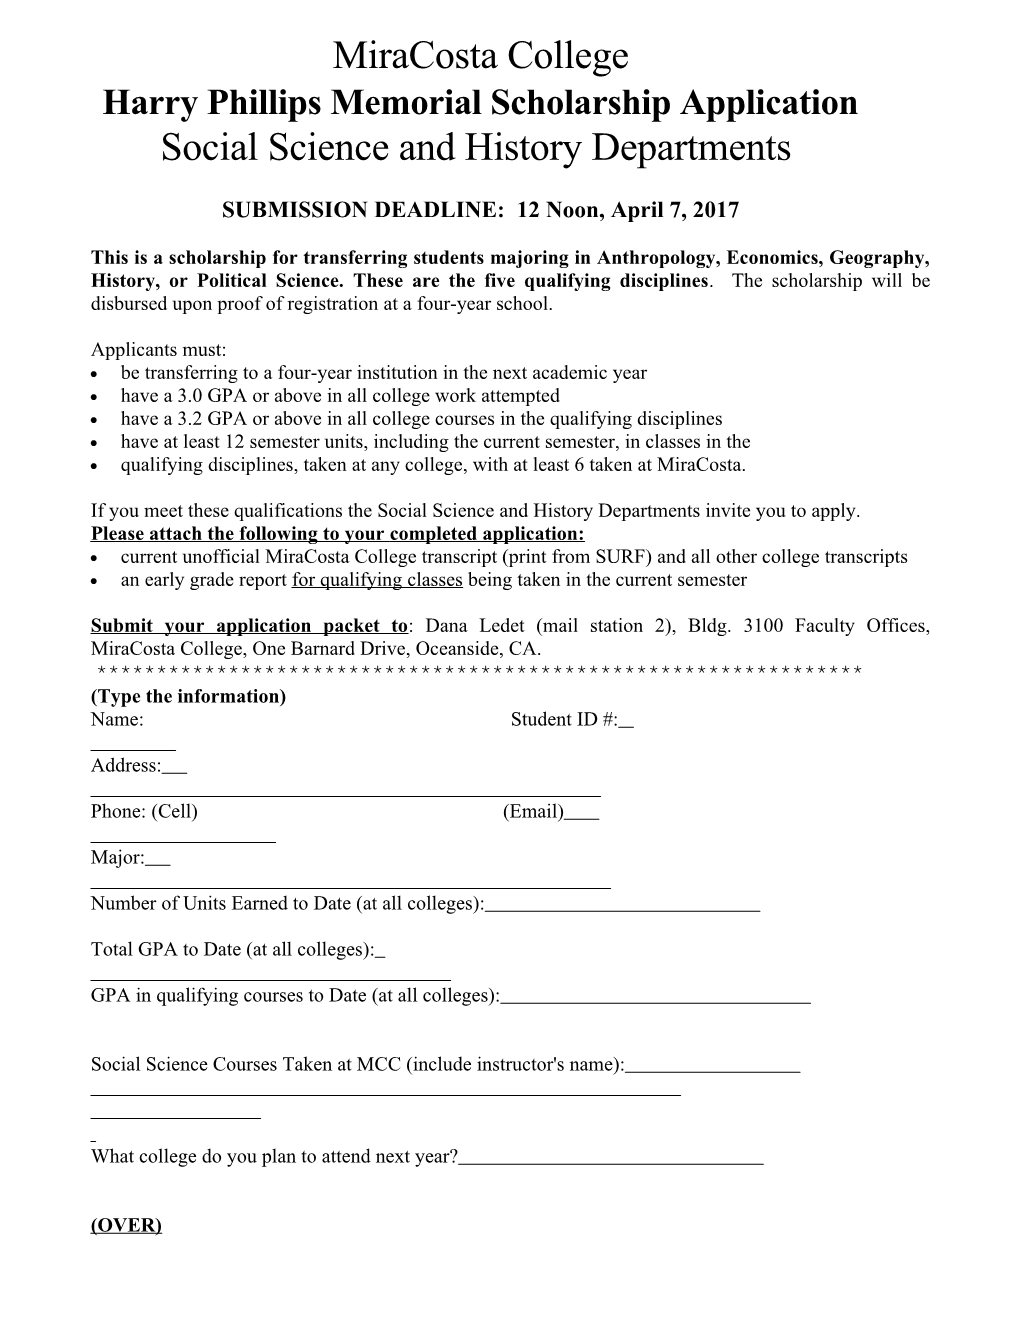 Phillips Scholarship Application Form